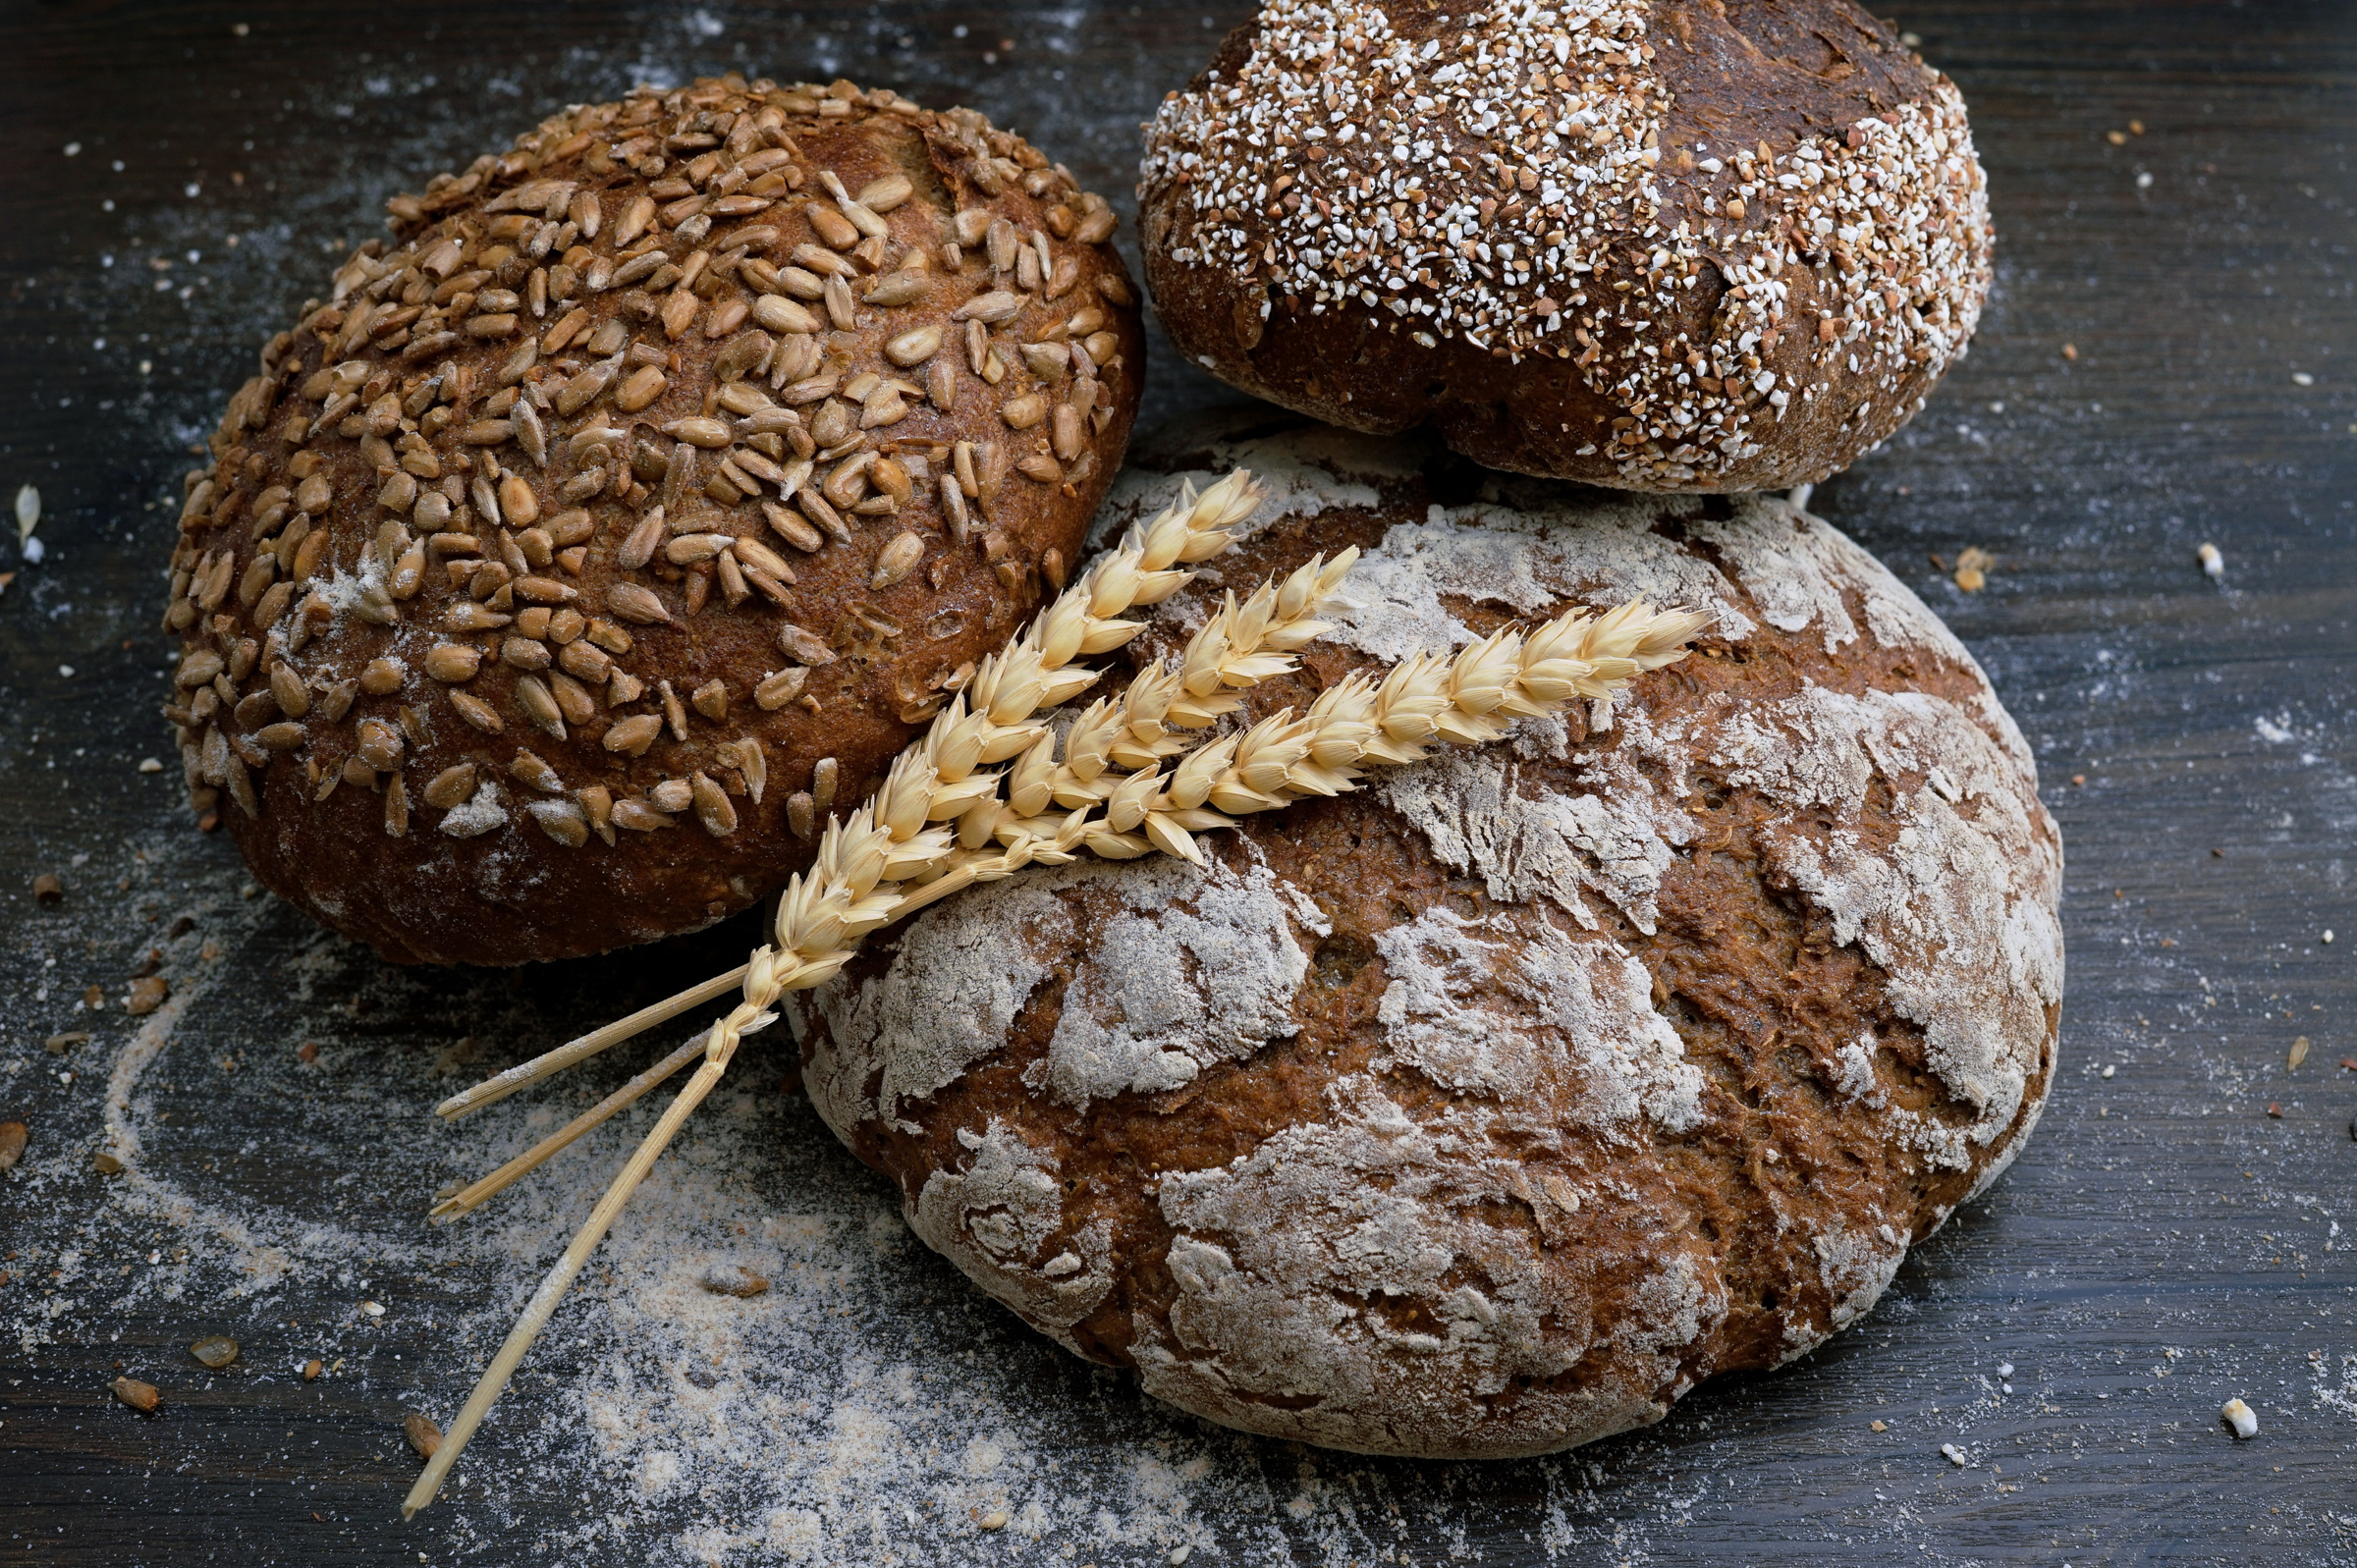 Three different loaves of grain bread from Franziskaner bakery in Bozen, Italy. 